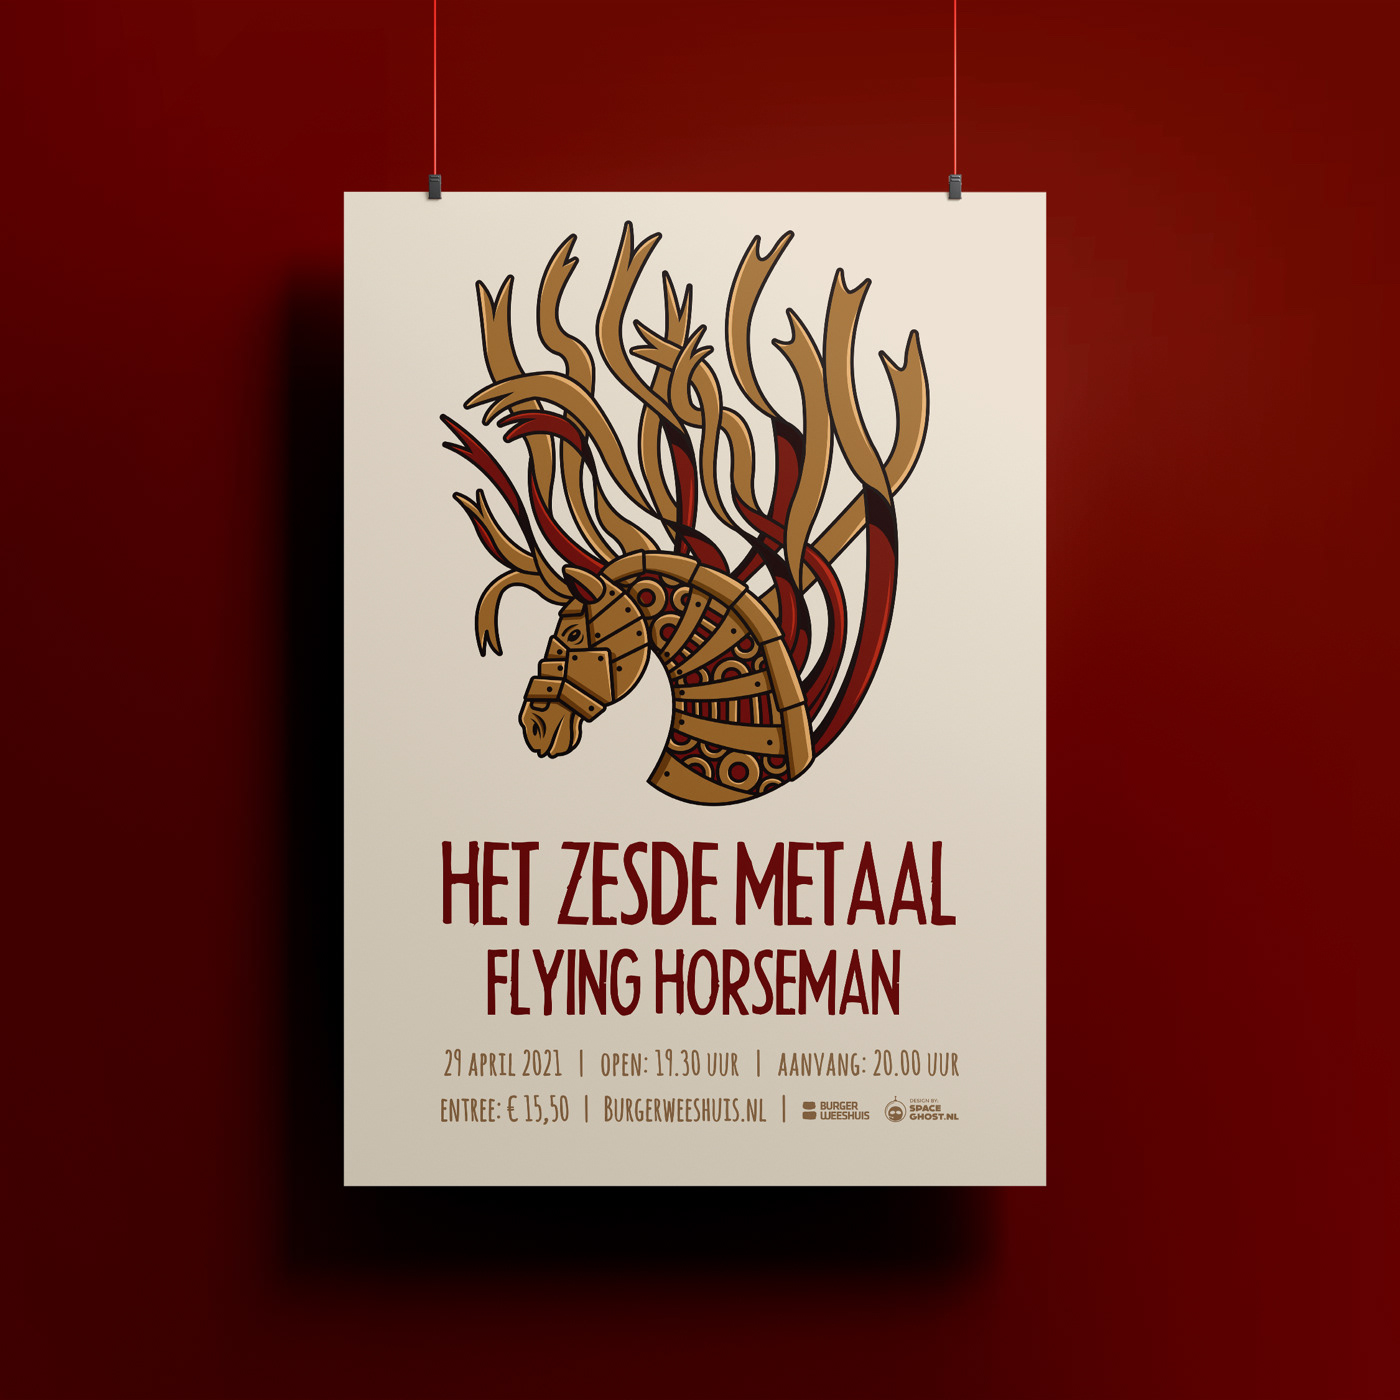 Belguim hair het zesde metaal horse metal music poster spaceghost vector